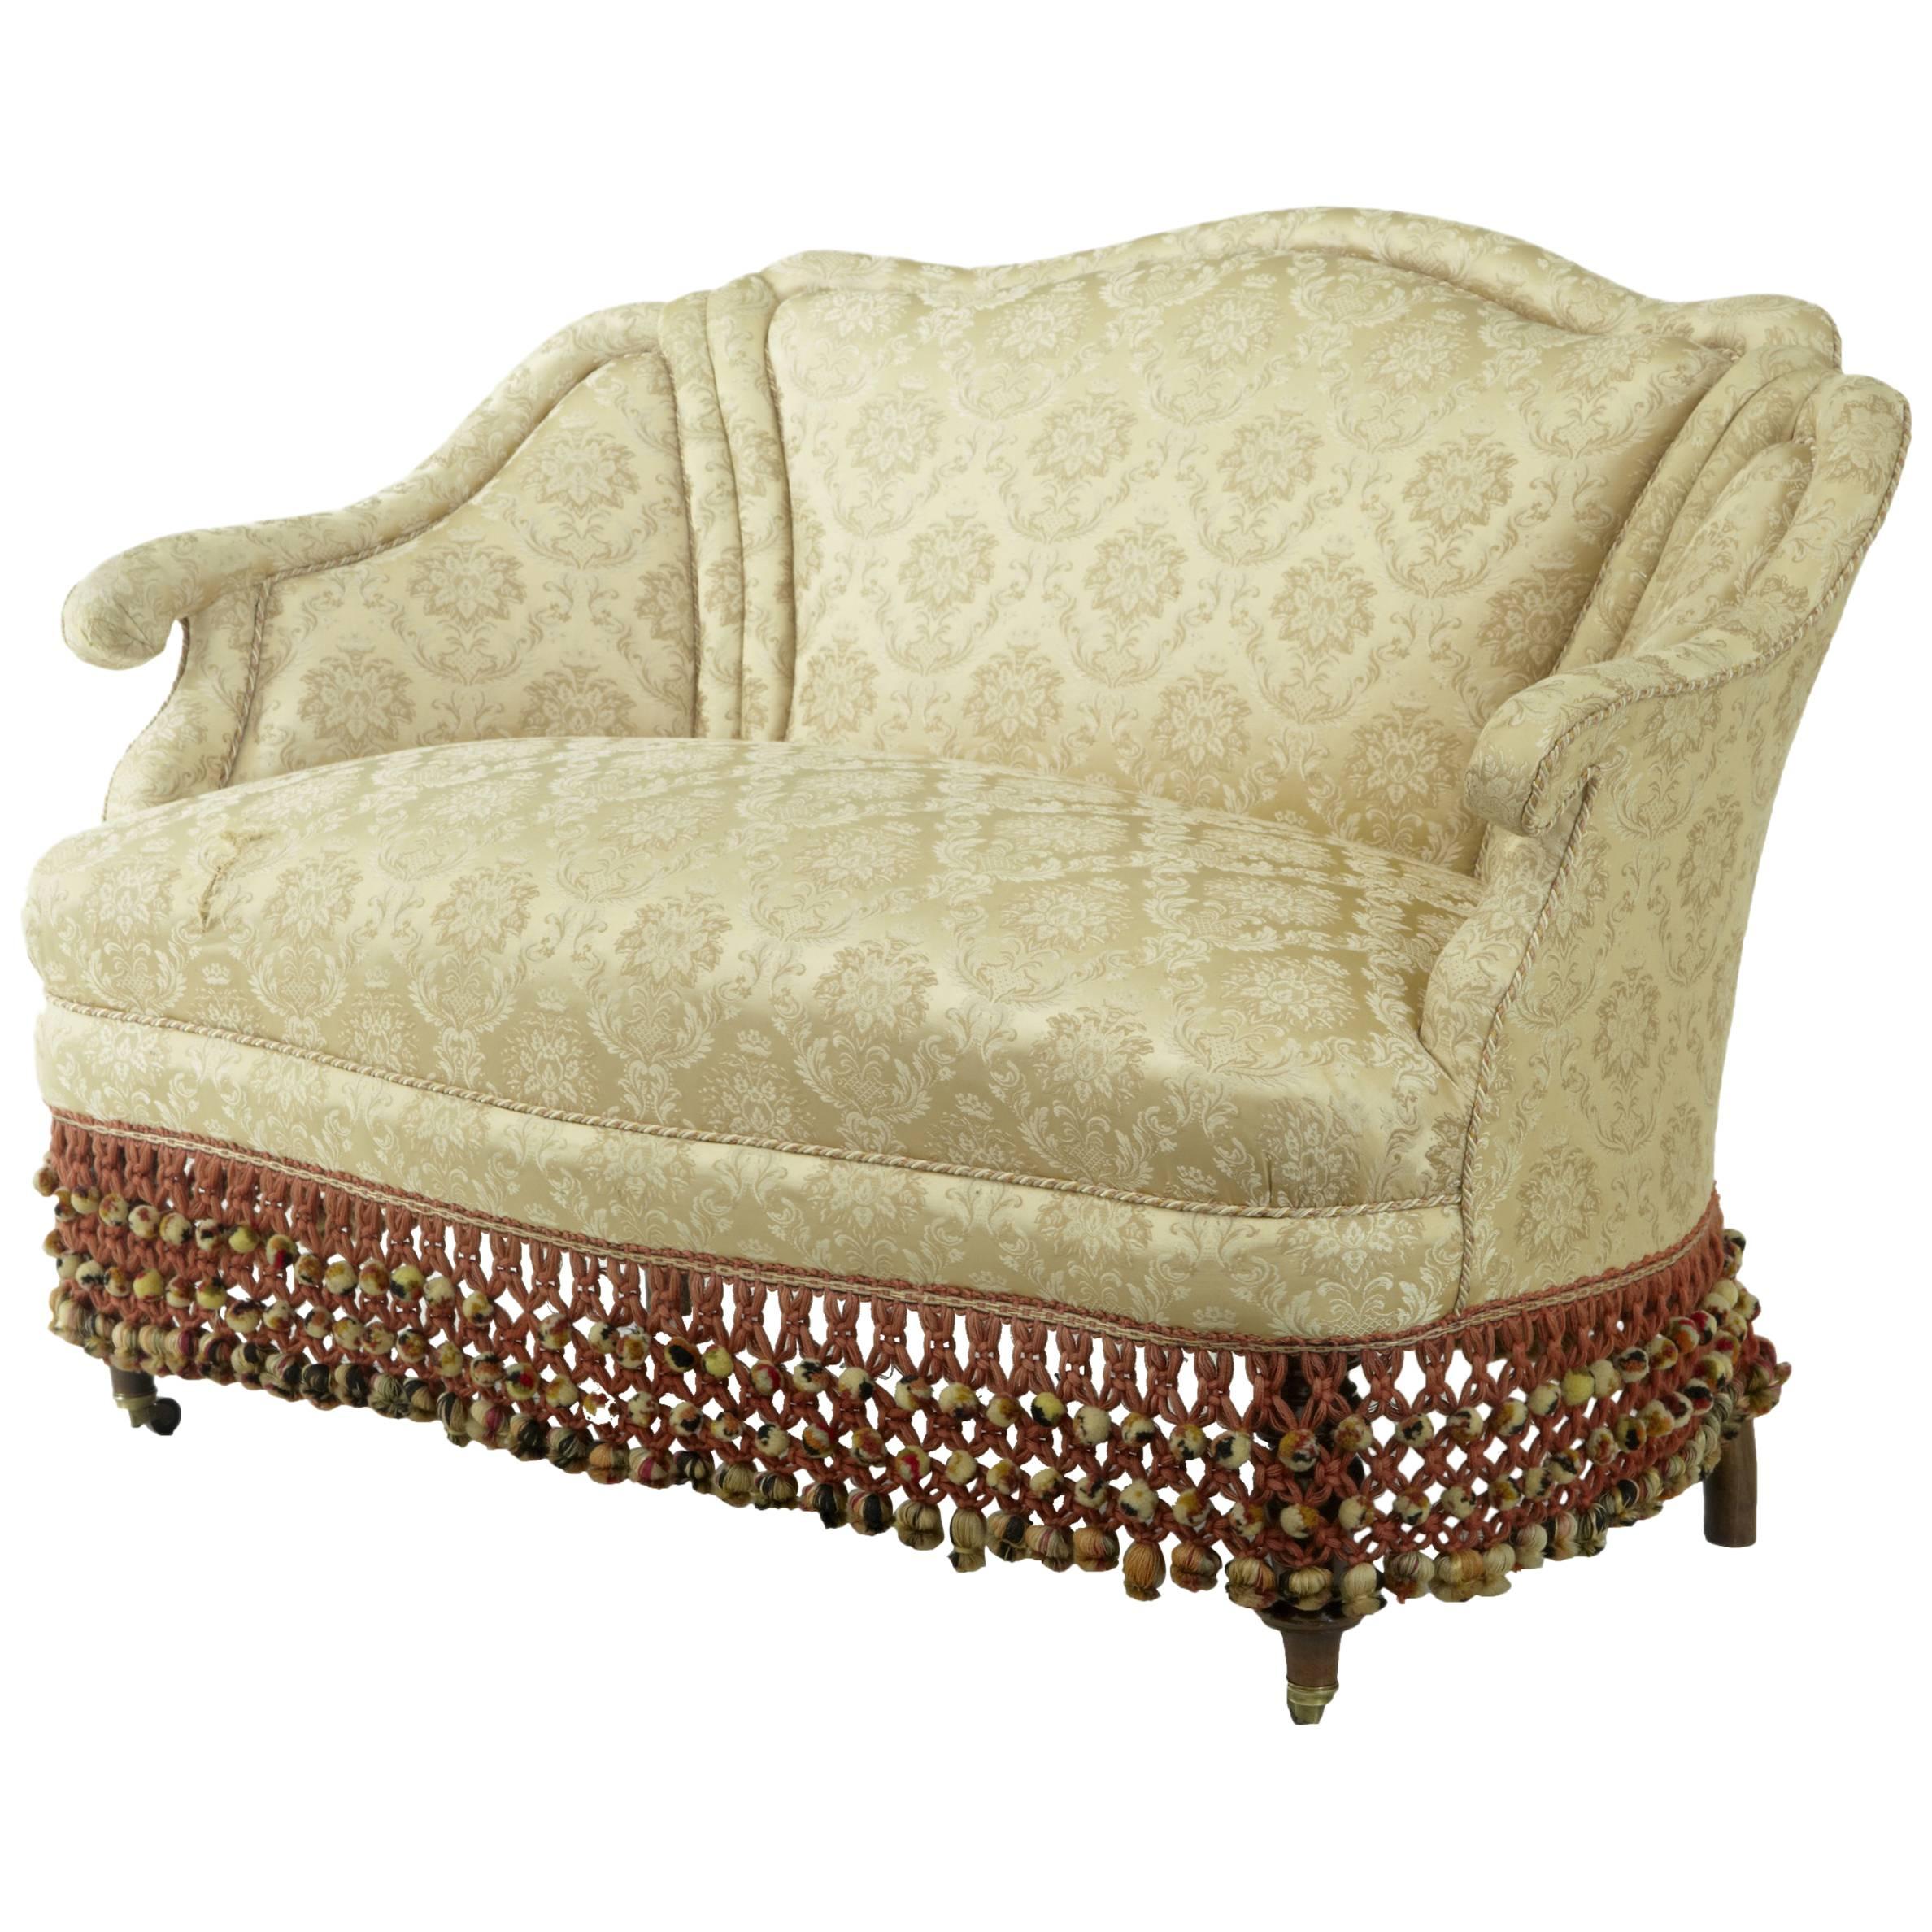 1920s Boudoire Small Sofa Settee